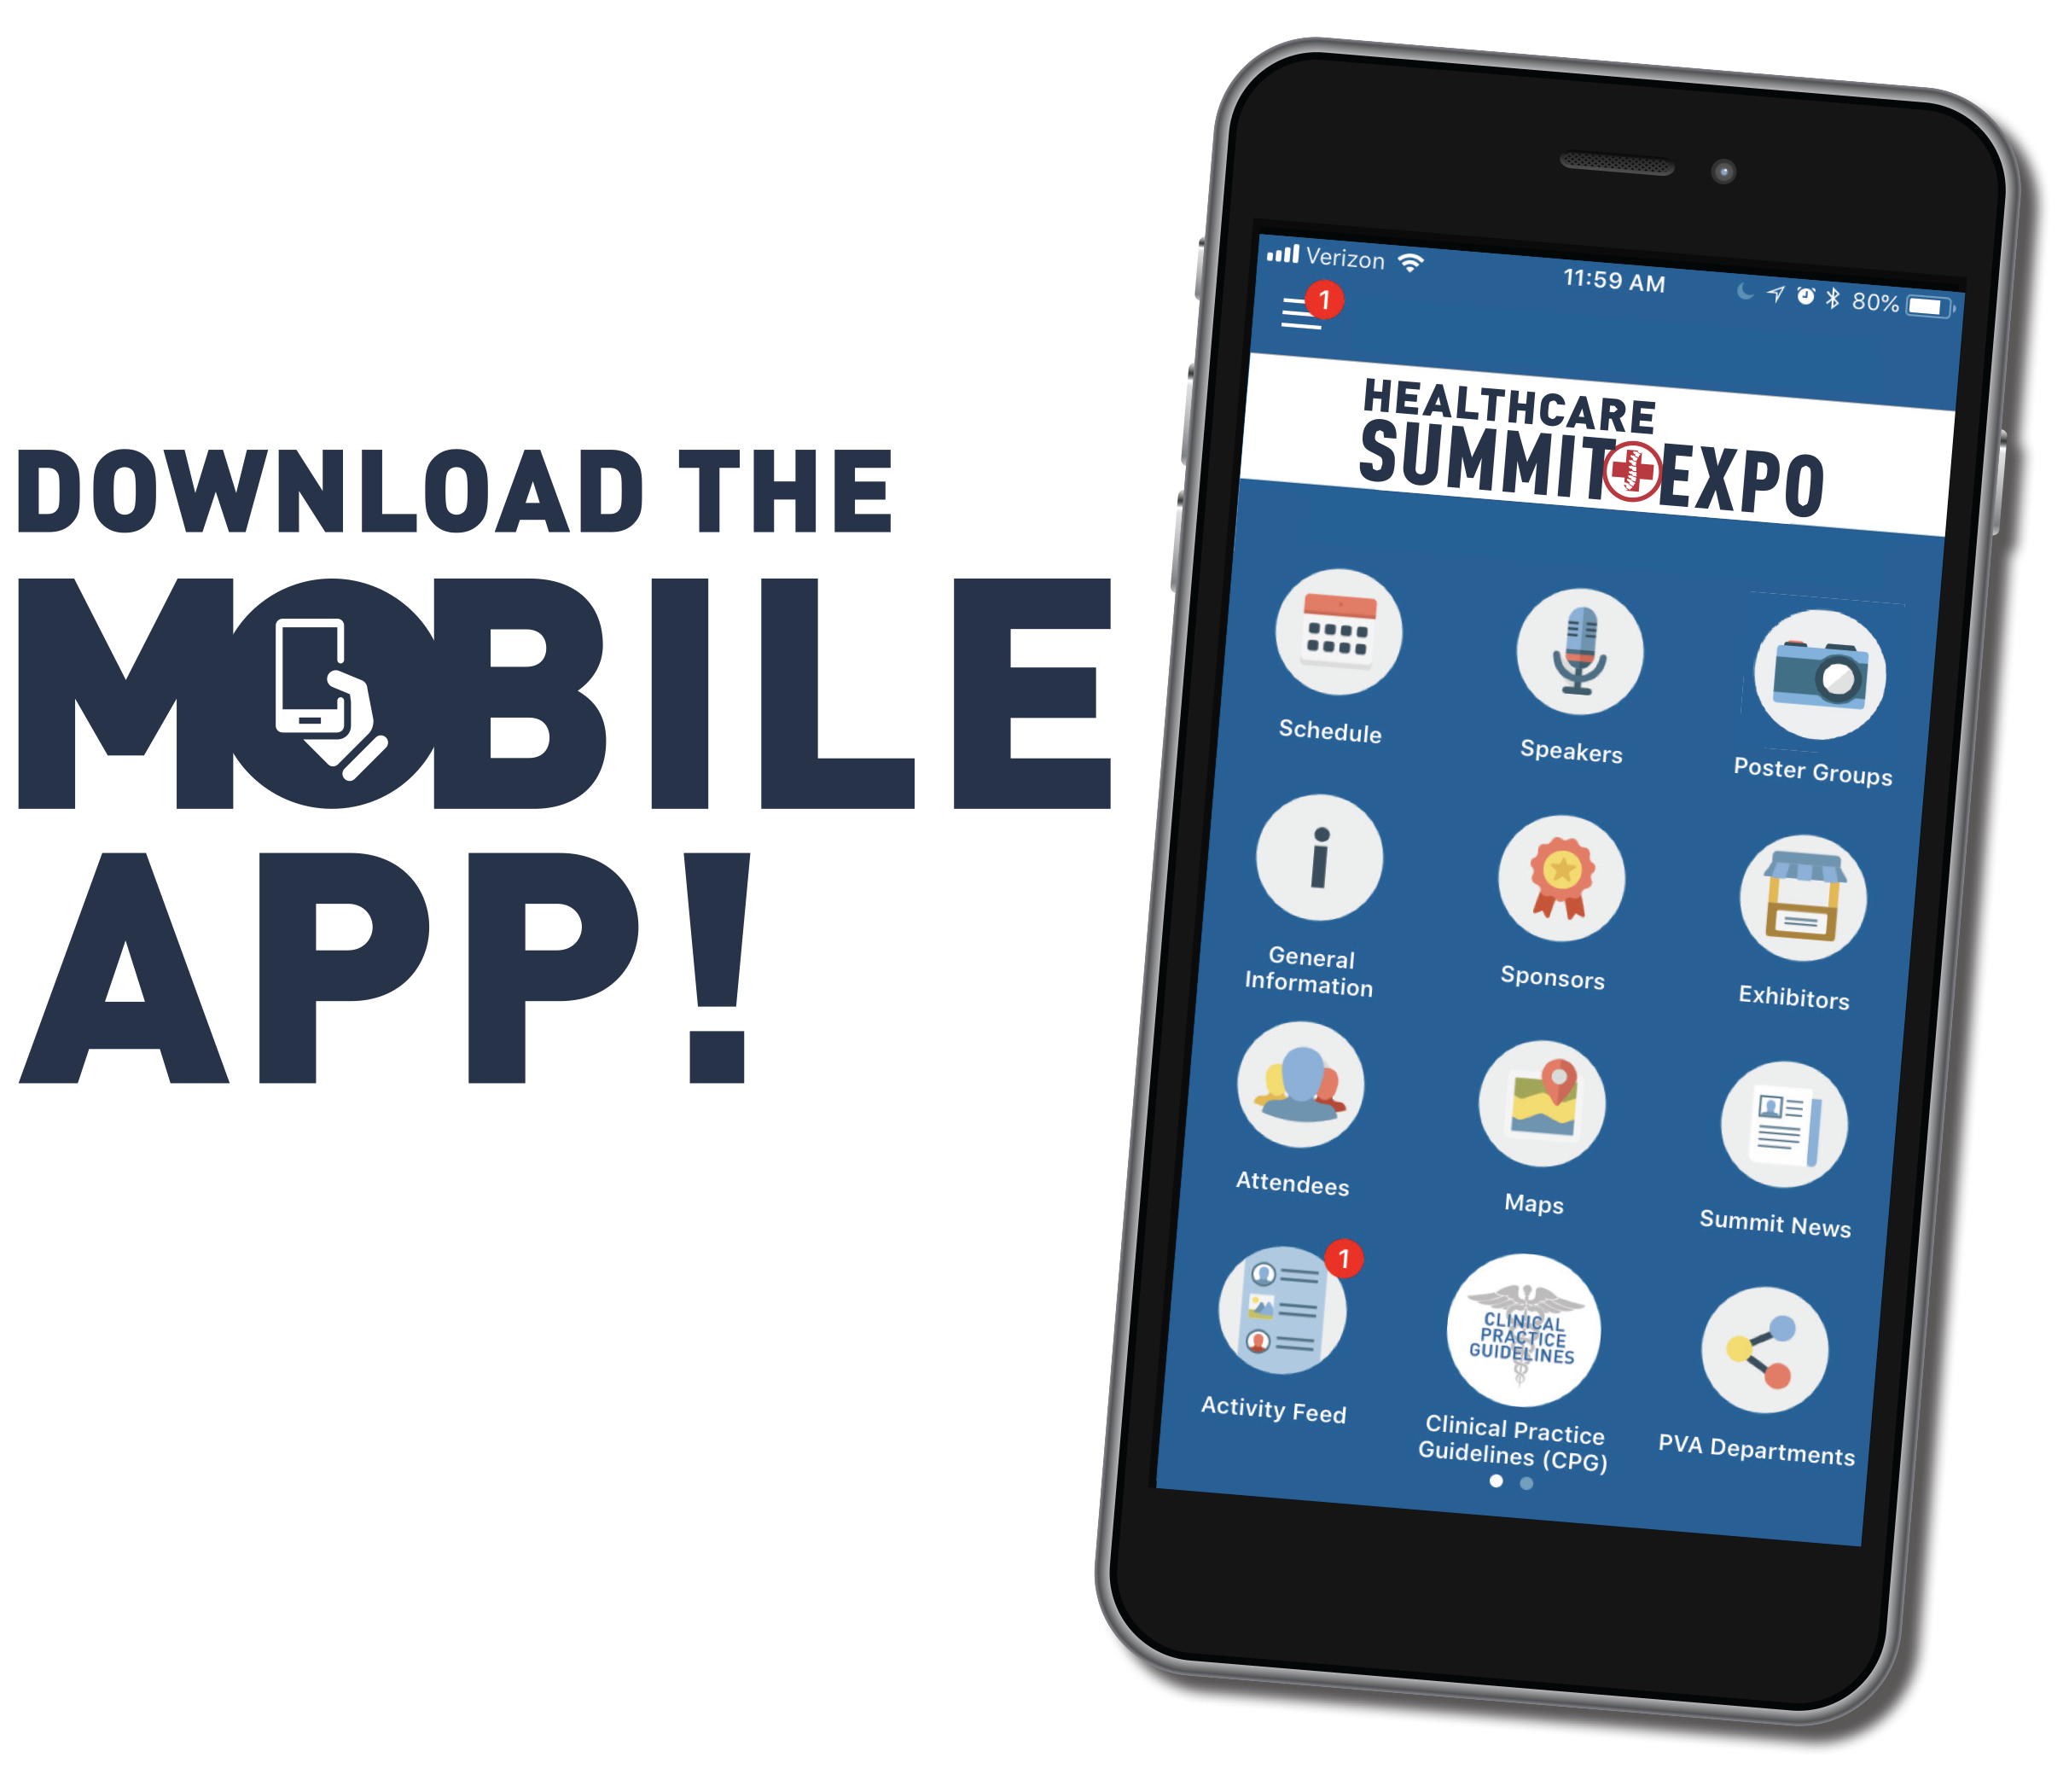 Download the PVA Healthcare Summit + Expo mobile app